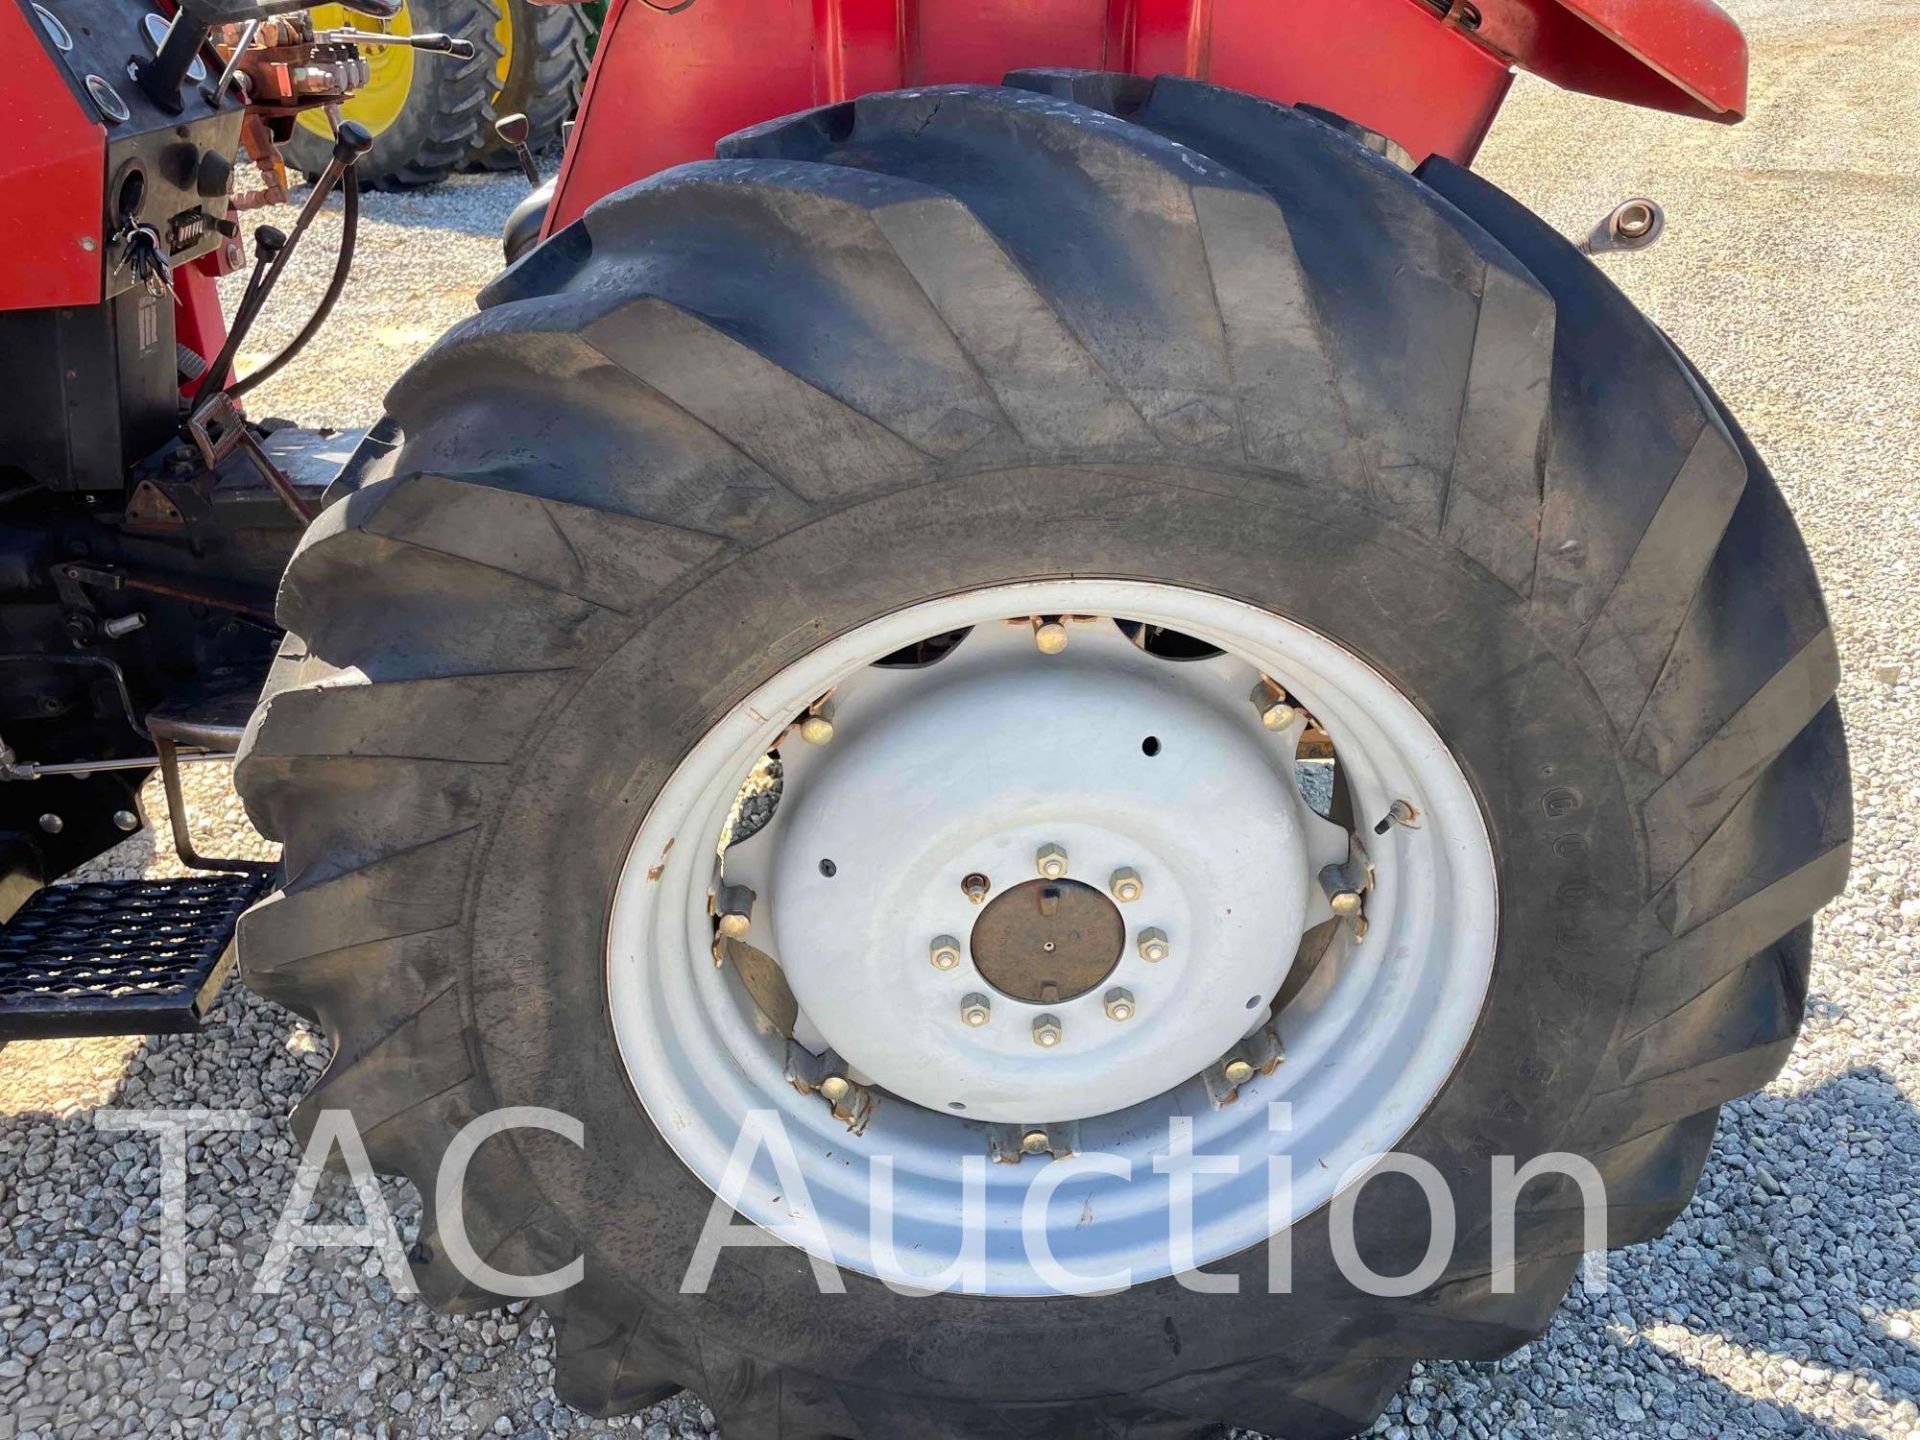 Massey Ferguson 281 Tractor W/ Front End Loader - Image 36 of 43